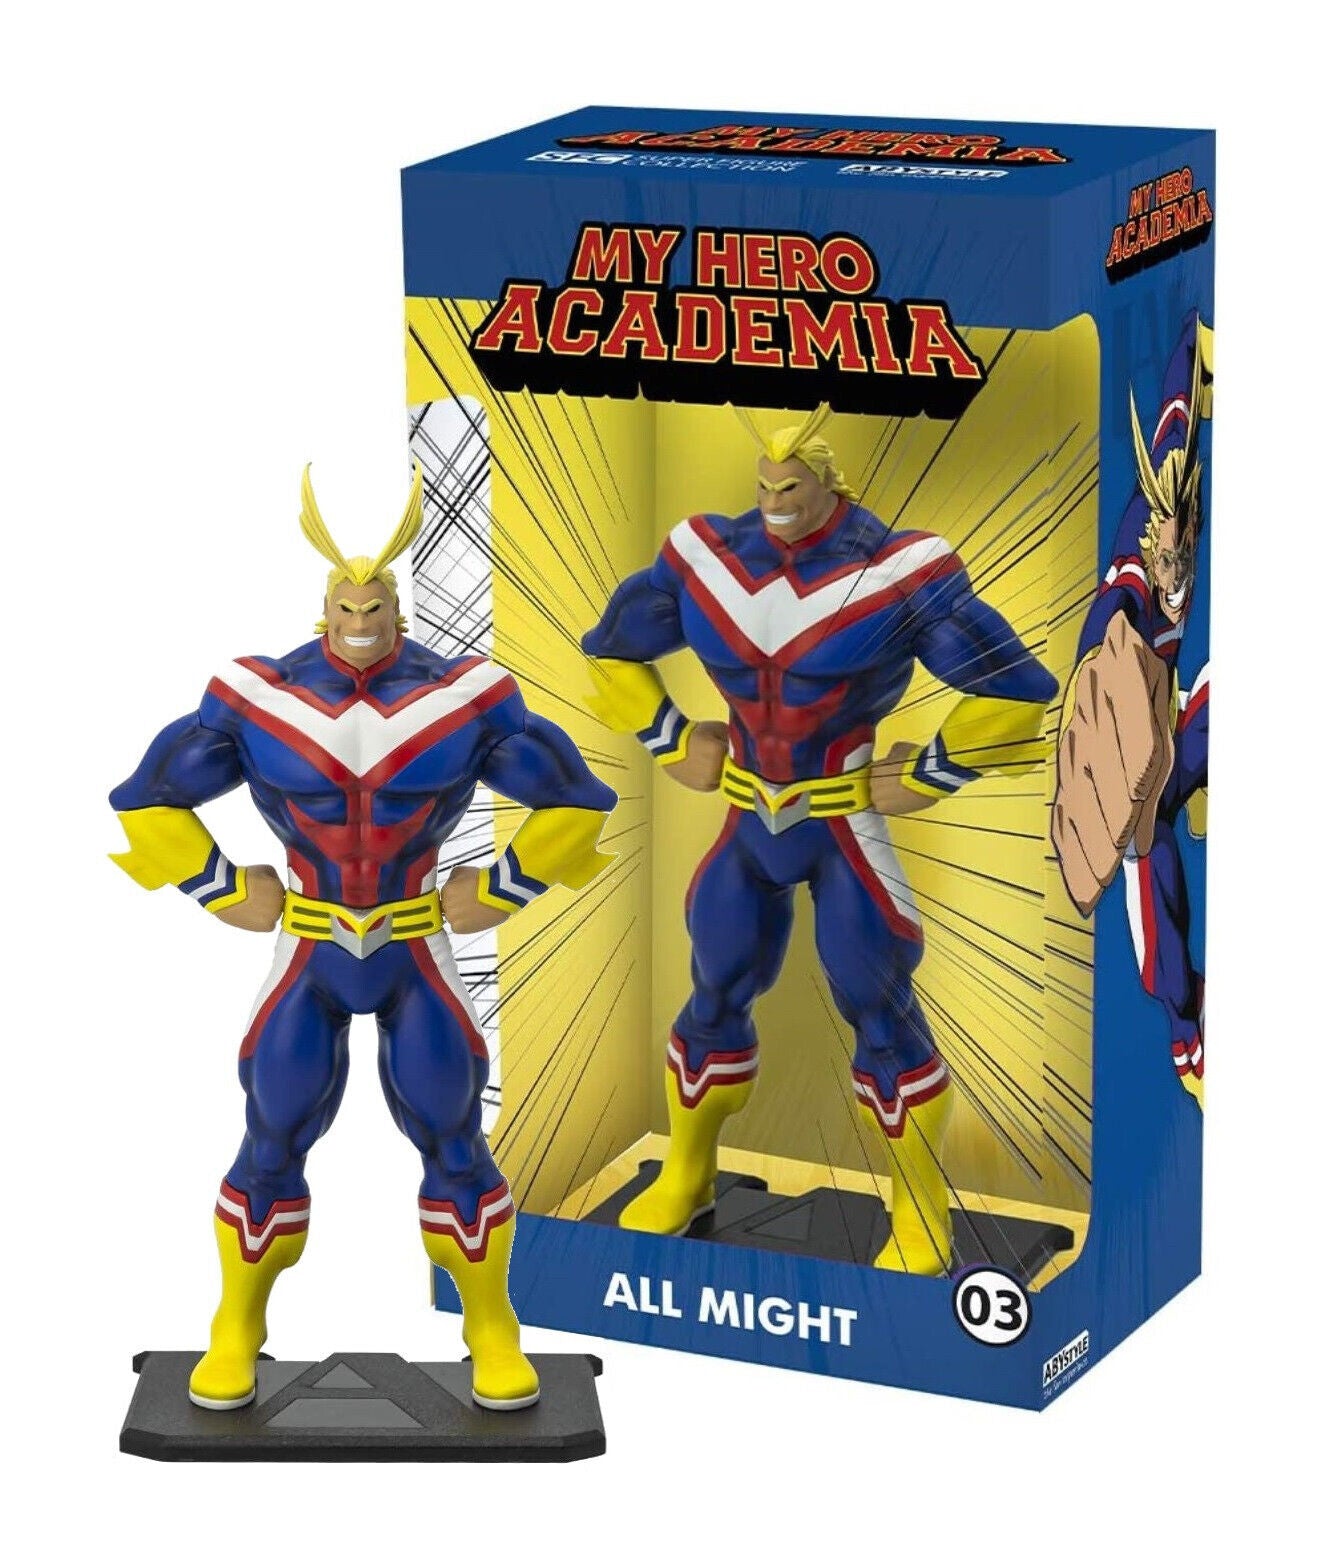 My Hero Academia 03 All Might Figurine *damaged box*